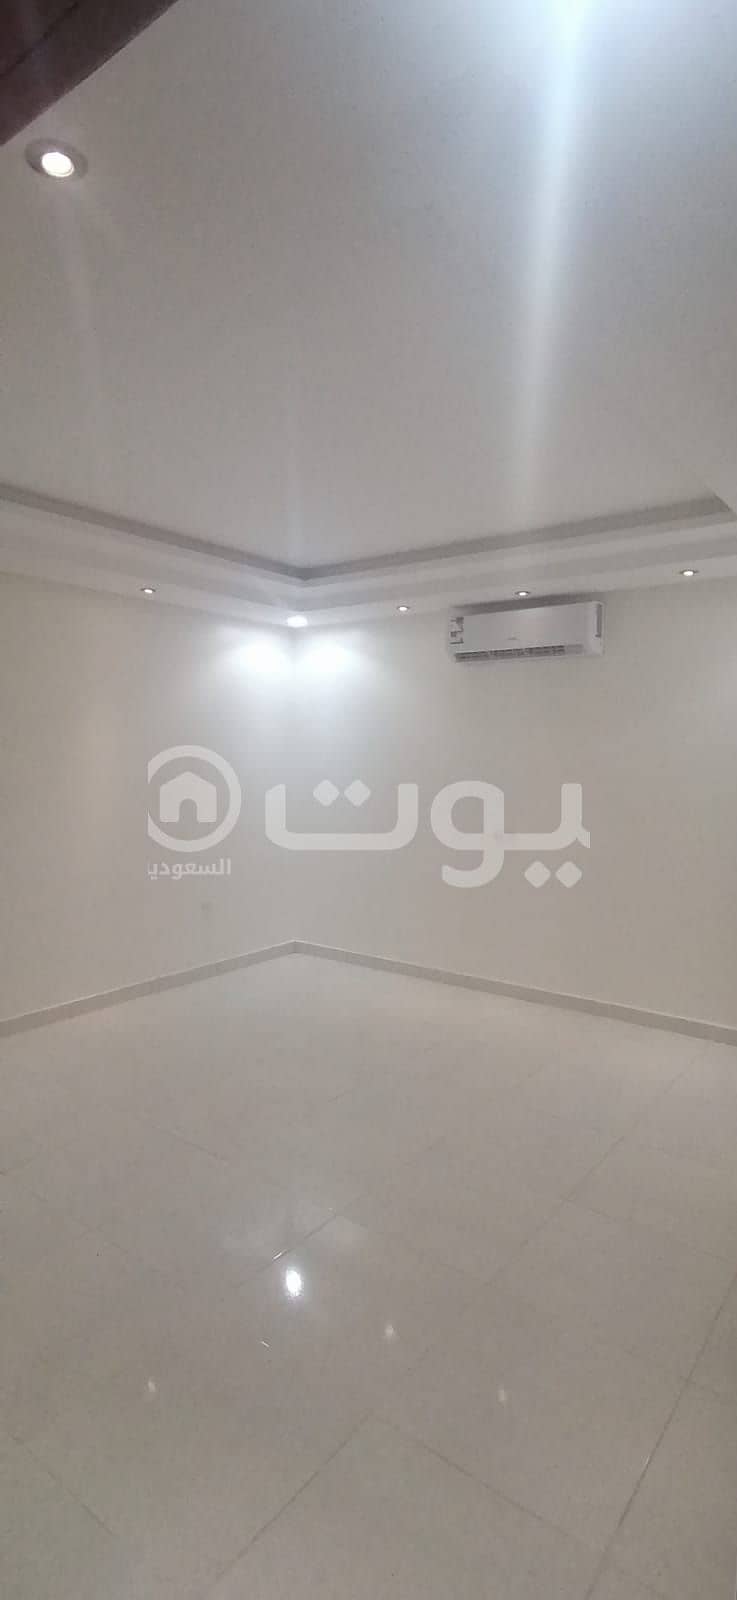 Single apartment for rent in dhahrat namar neighborhood, west of Riyadh